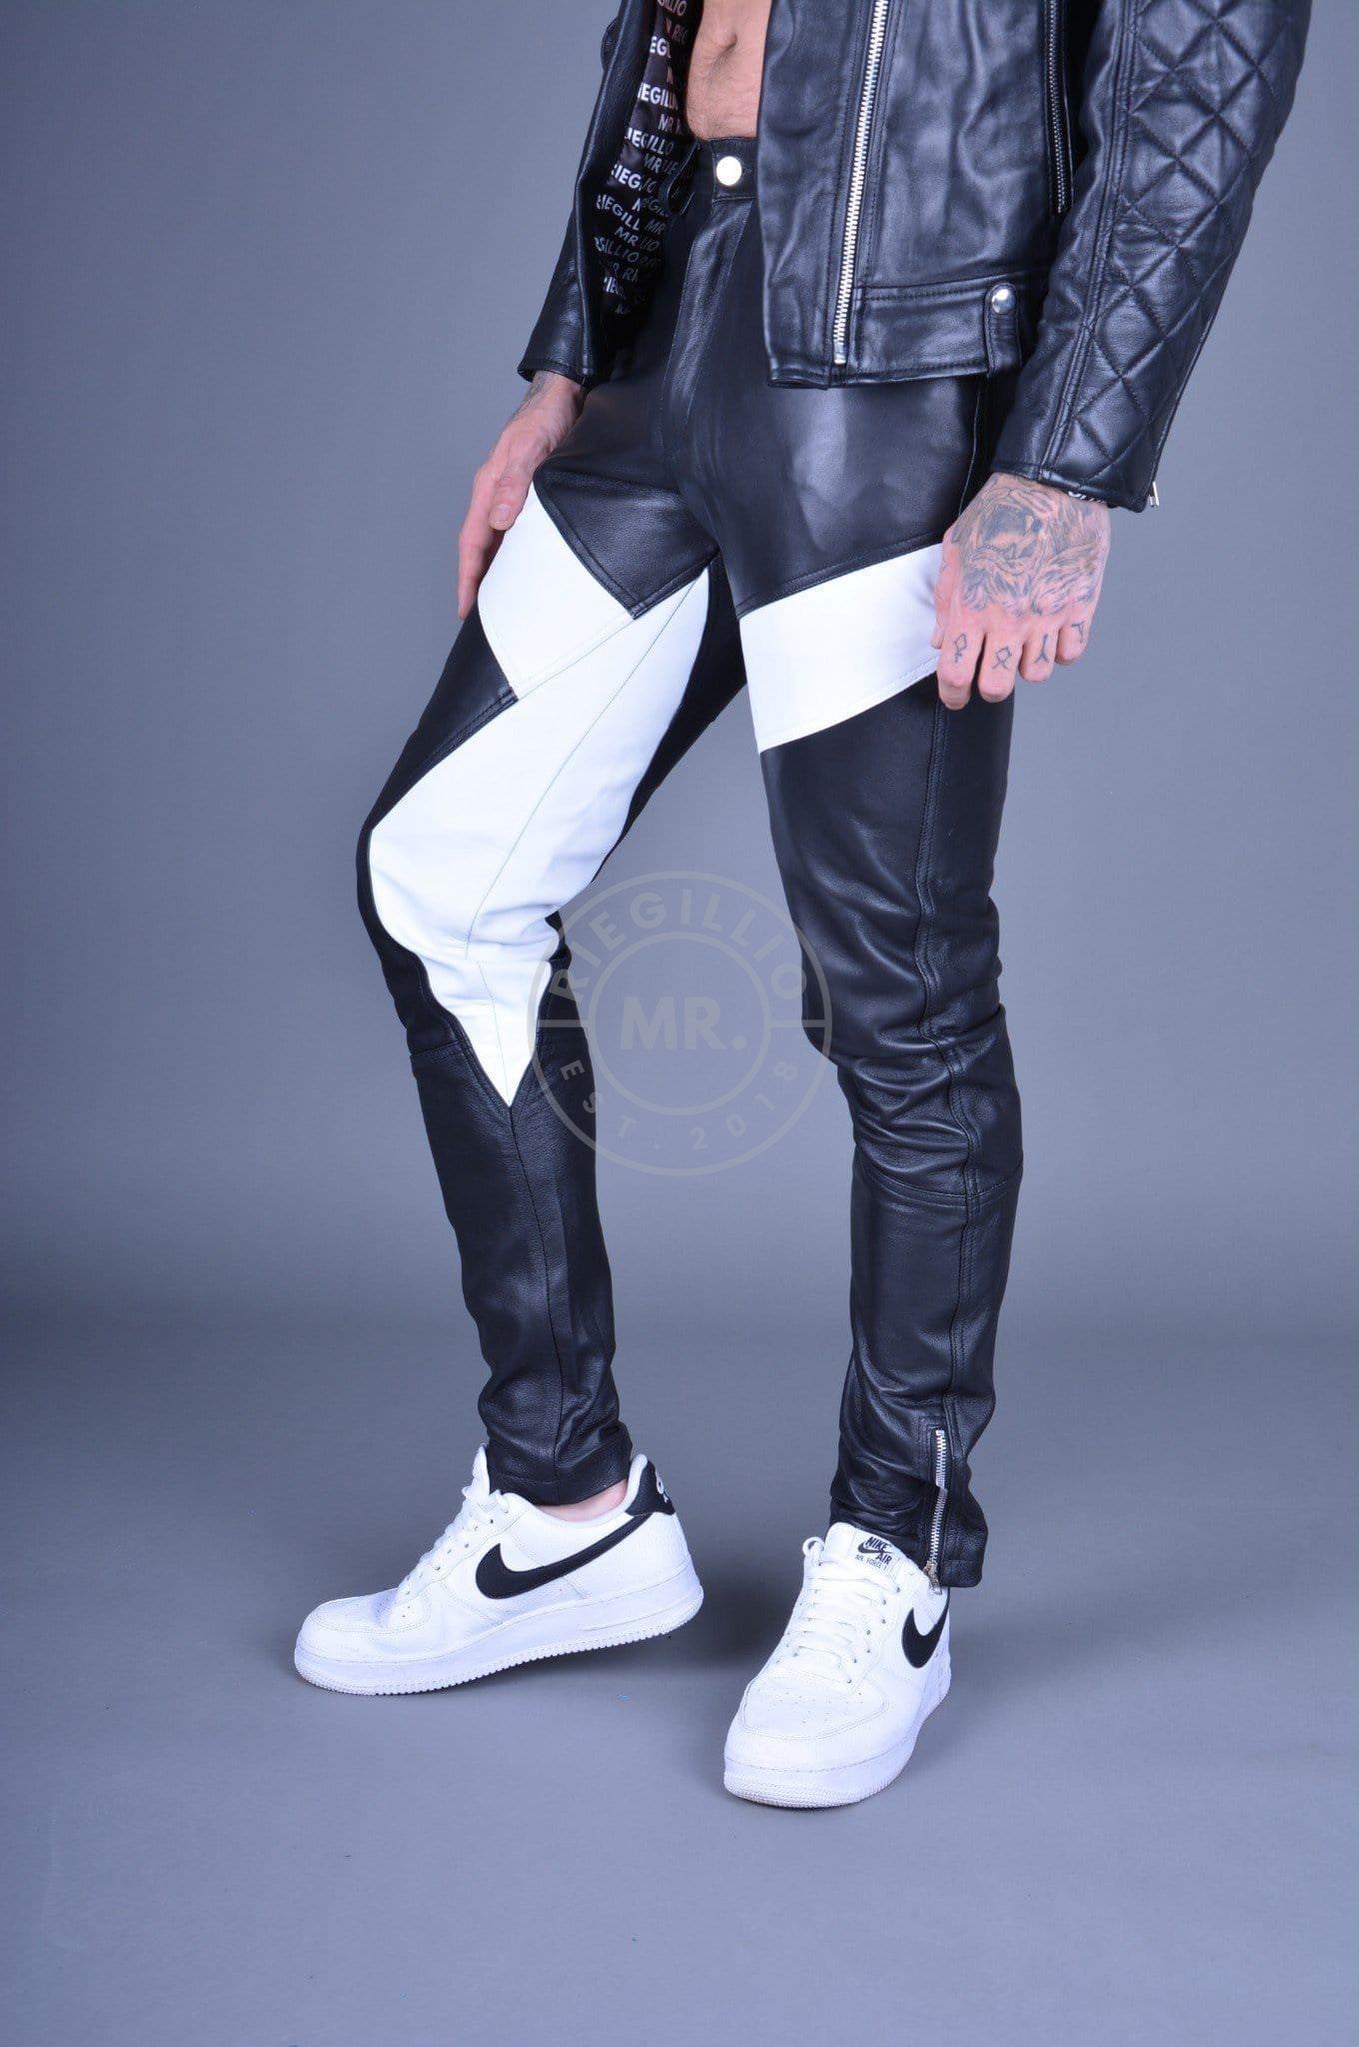 Leather Pants Black & White at MR. Riegillio